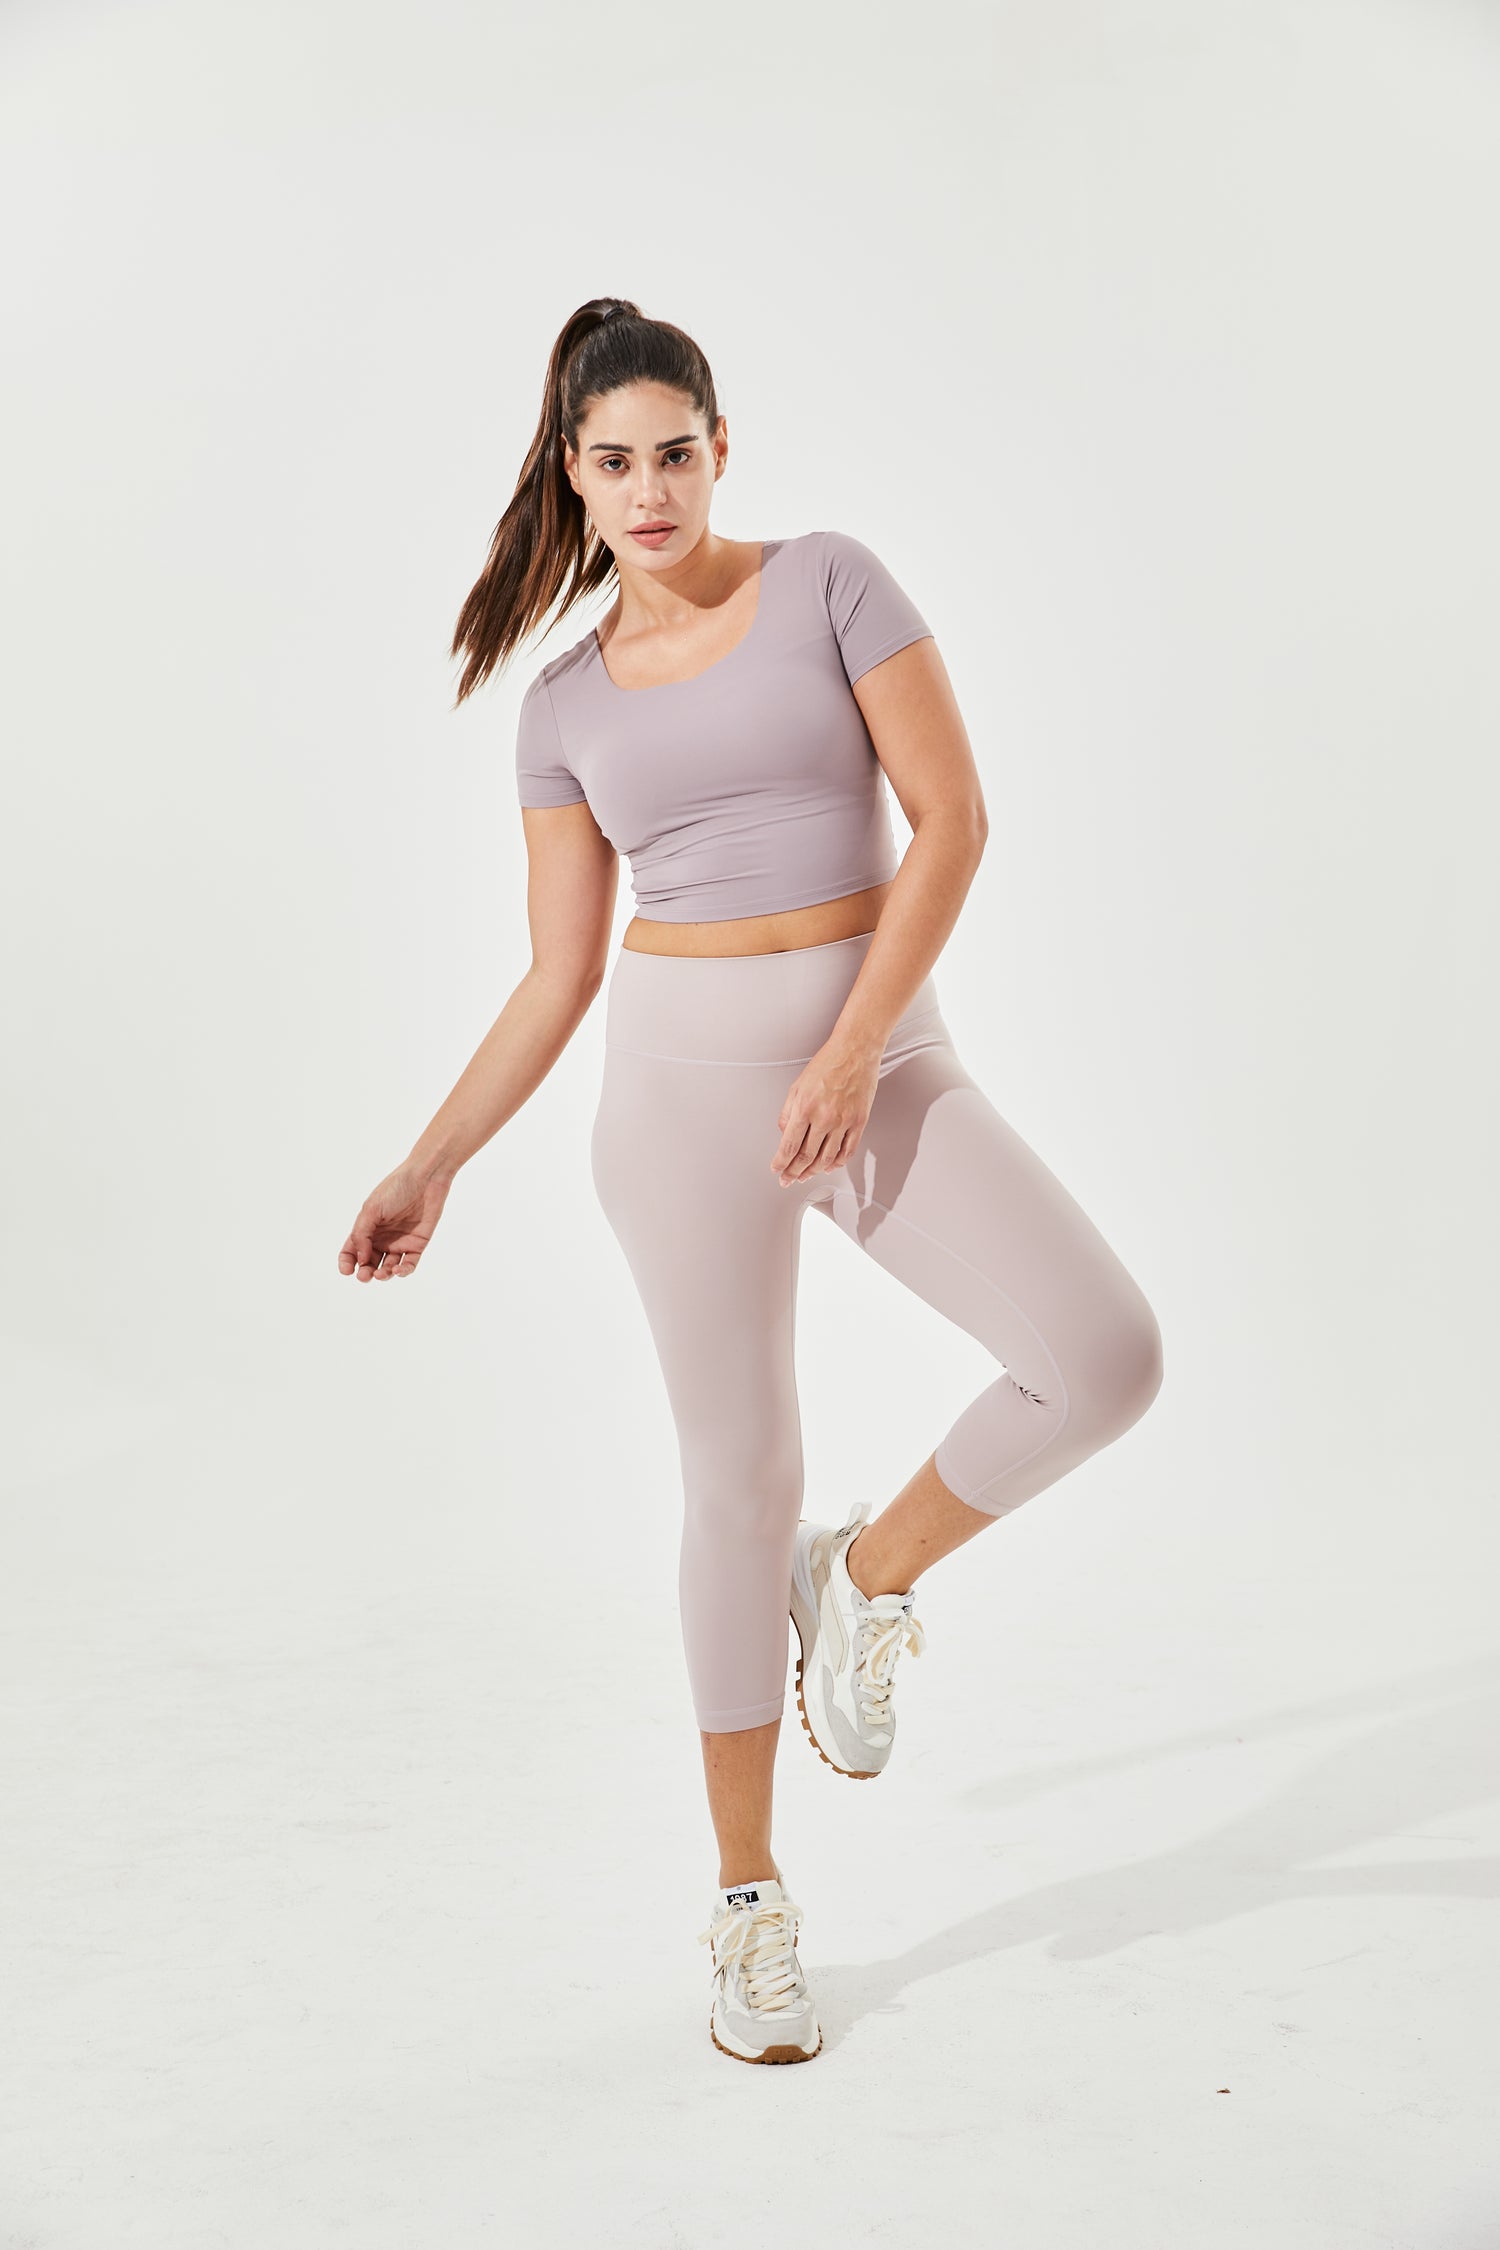 2021 Fashionable 90 Degree Tight Stretchy 7/8 Long Yoga Pants